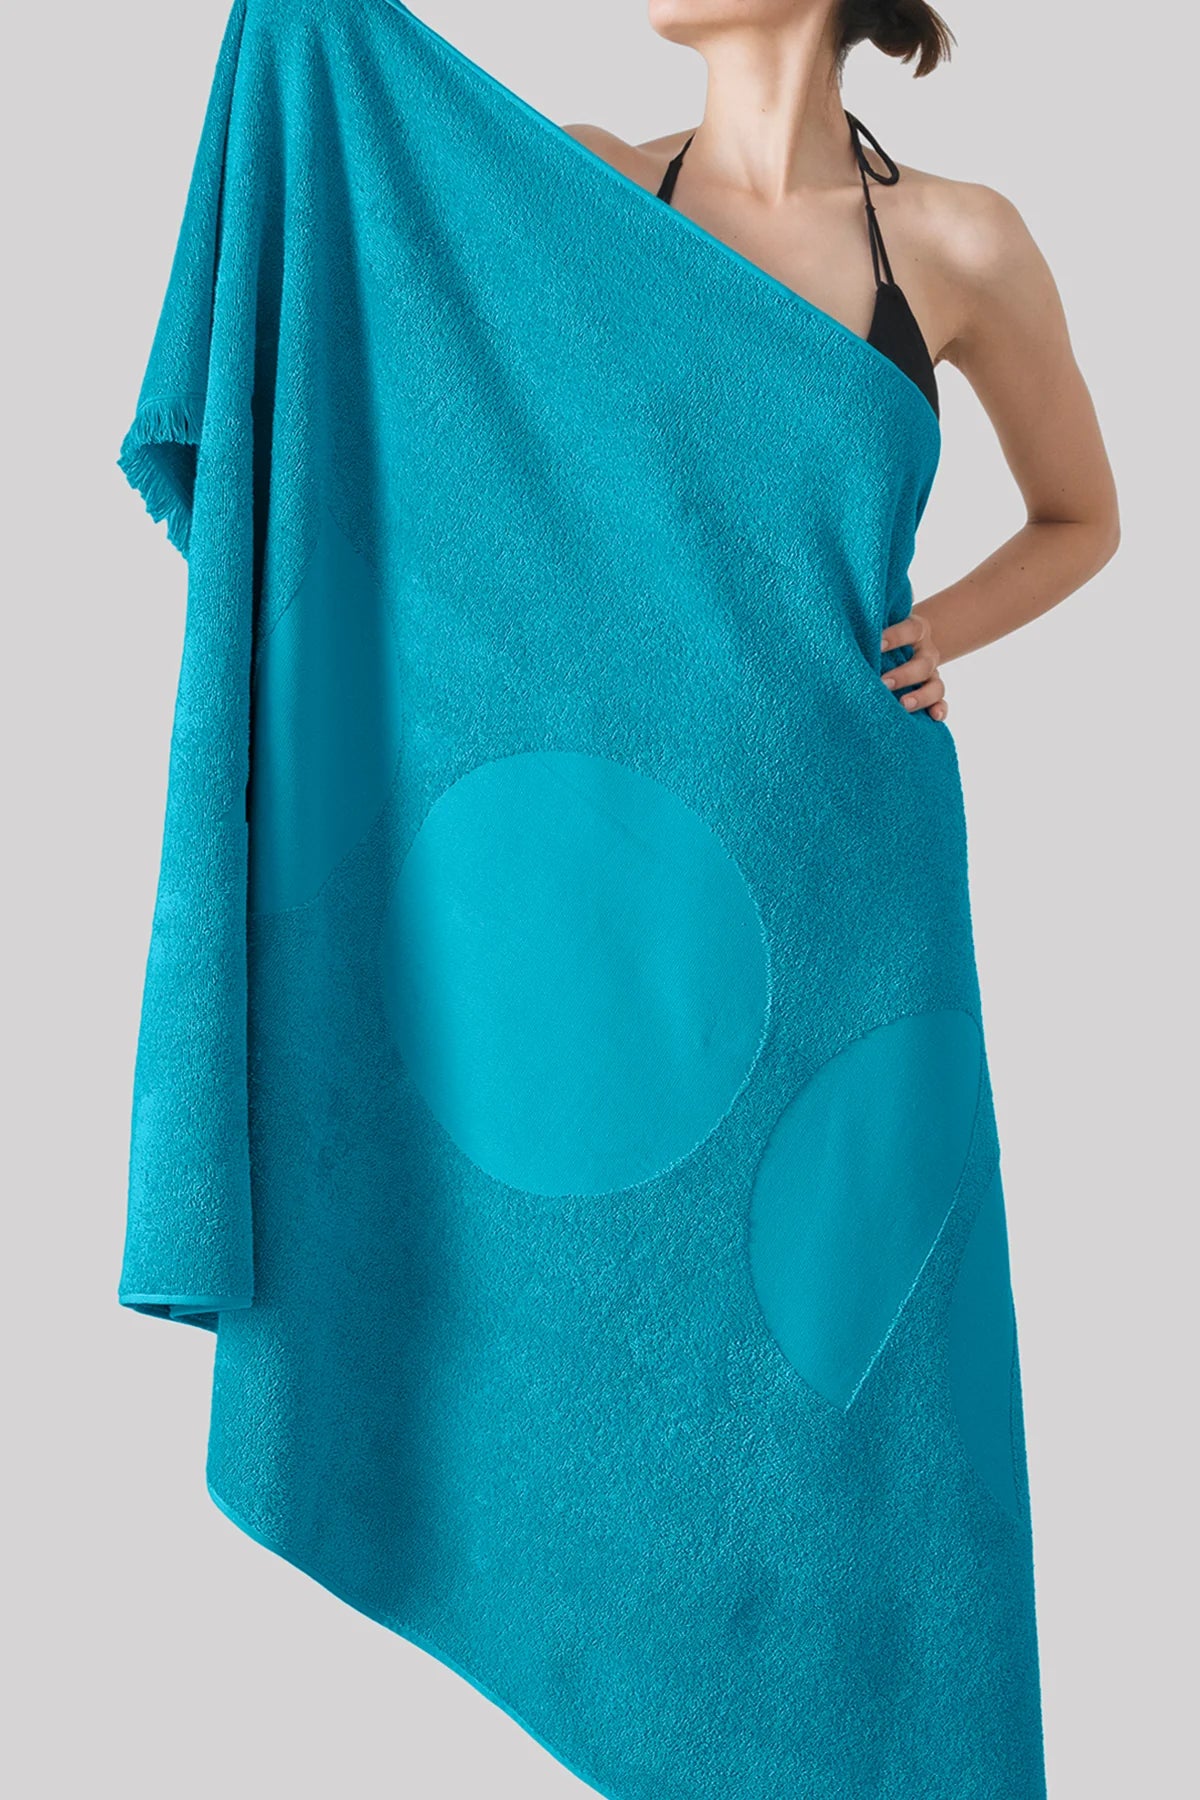 Lua Deep - New Summer Trend 100x180cm. Premium Beach Towel